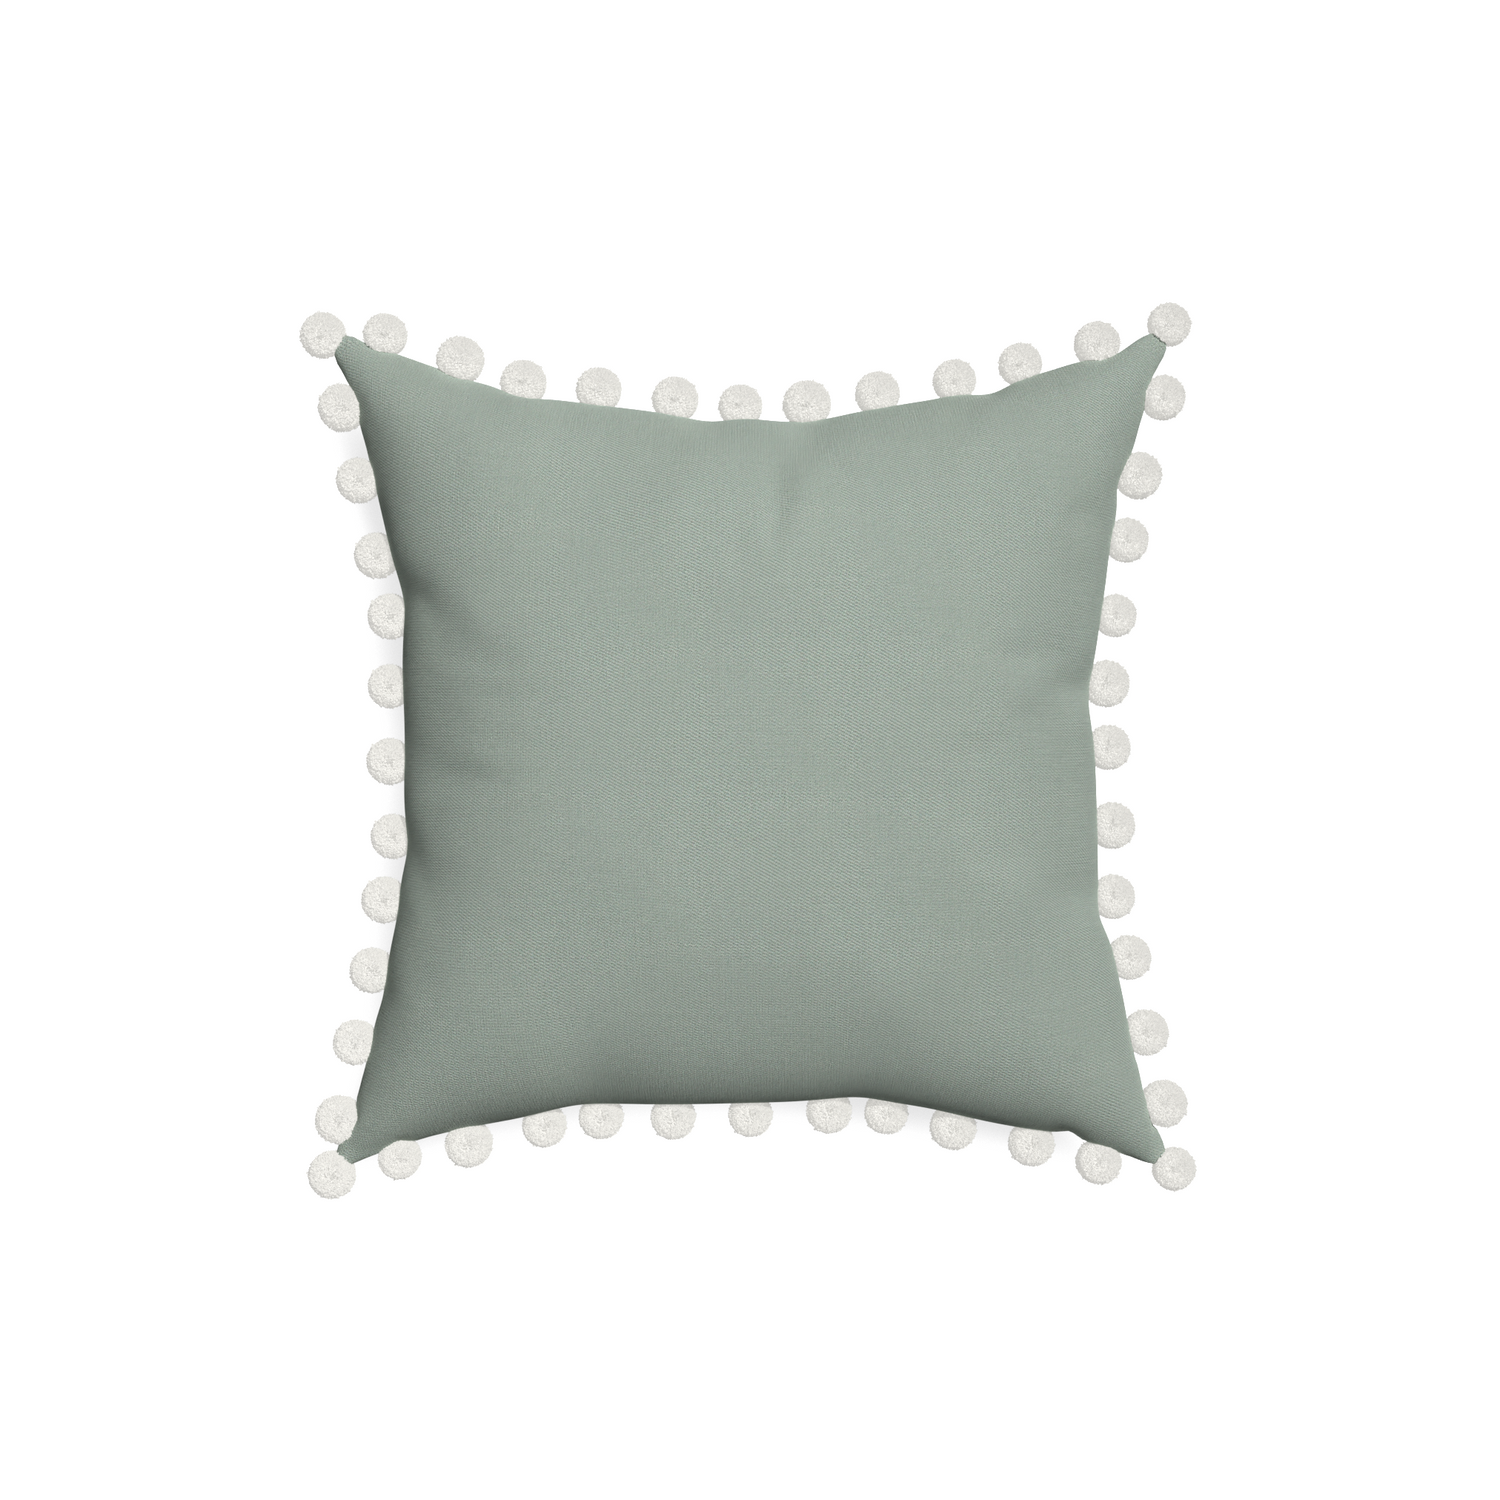 18-square sage custom pillow with snow pom pom on white background